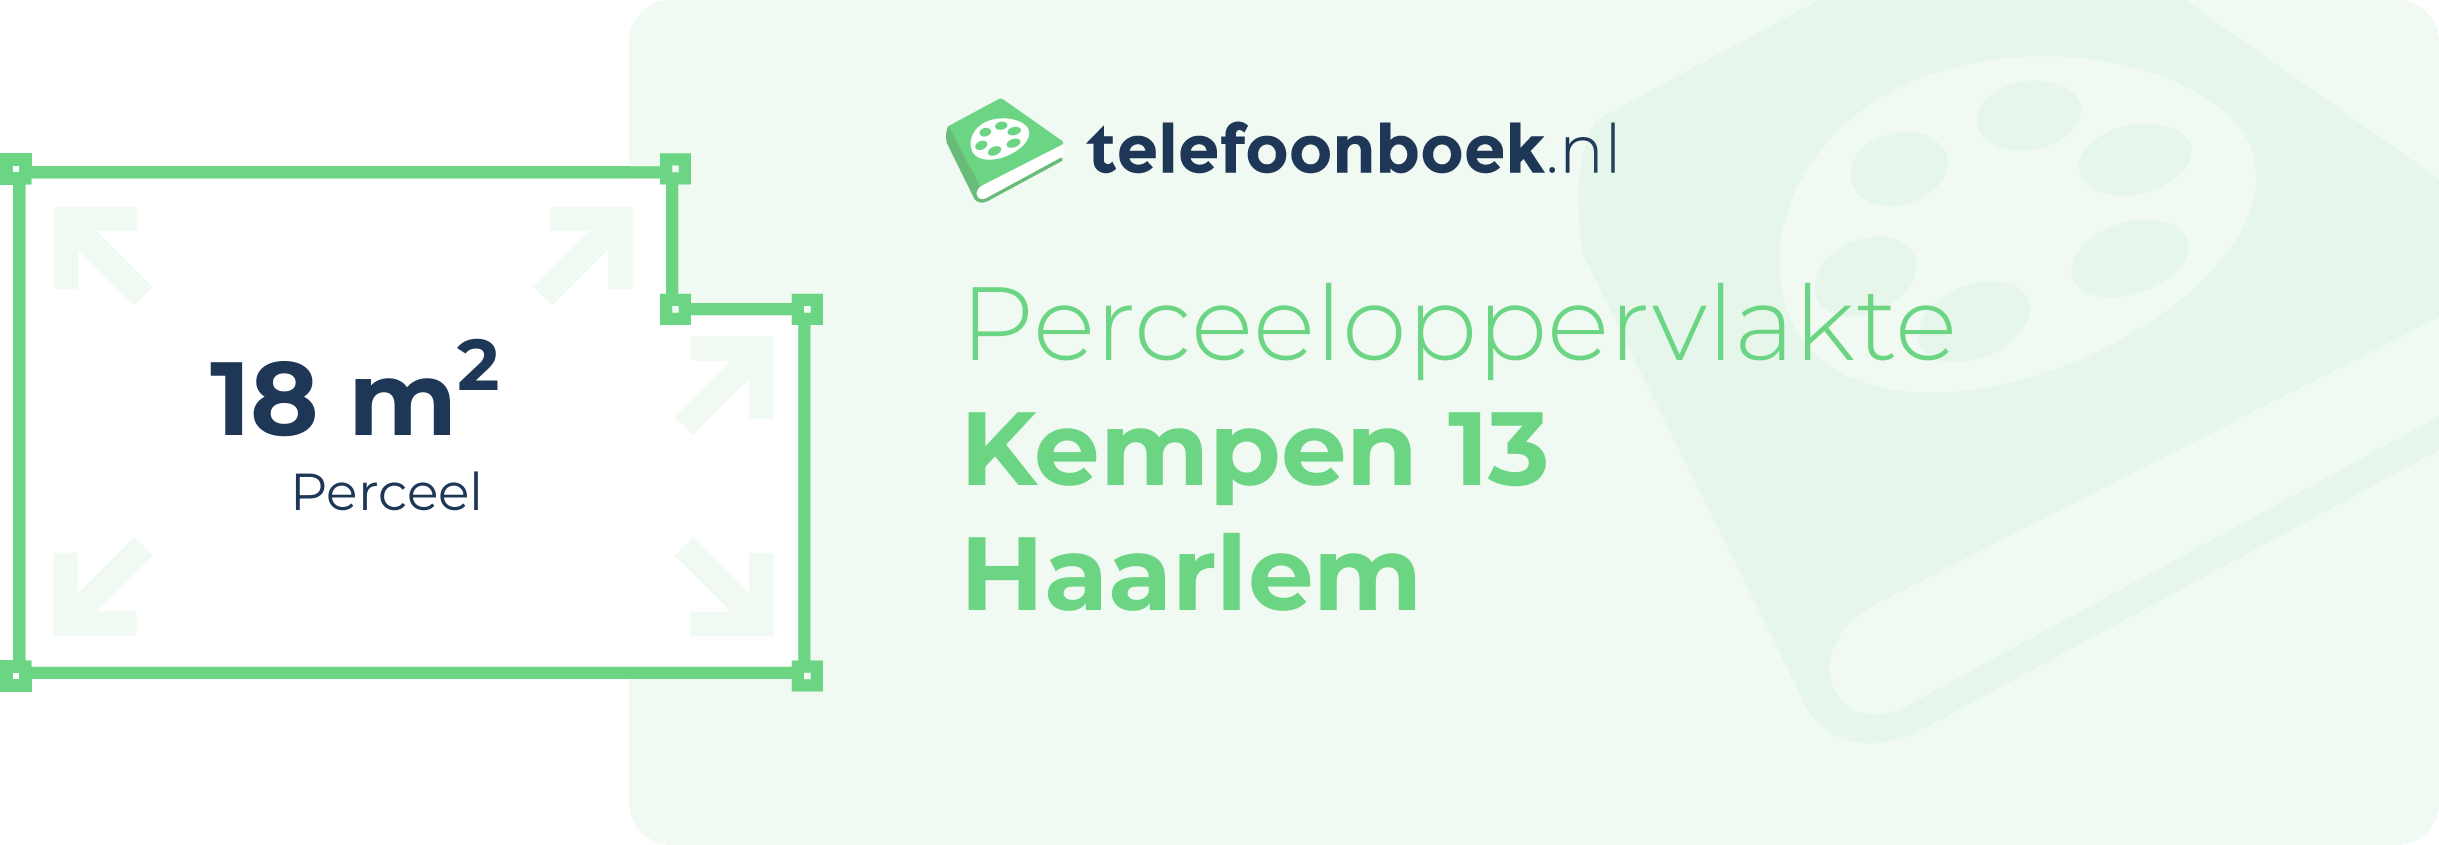 Perceeloppervlakte Kempen 13 Haarlem